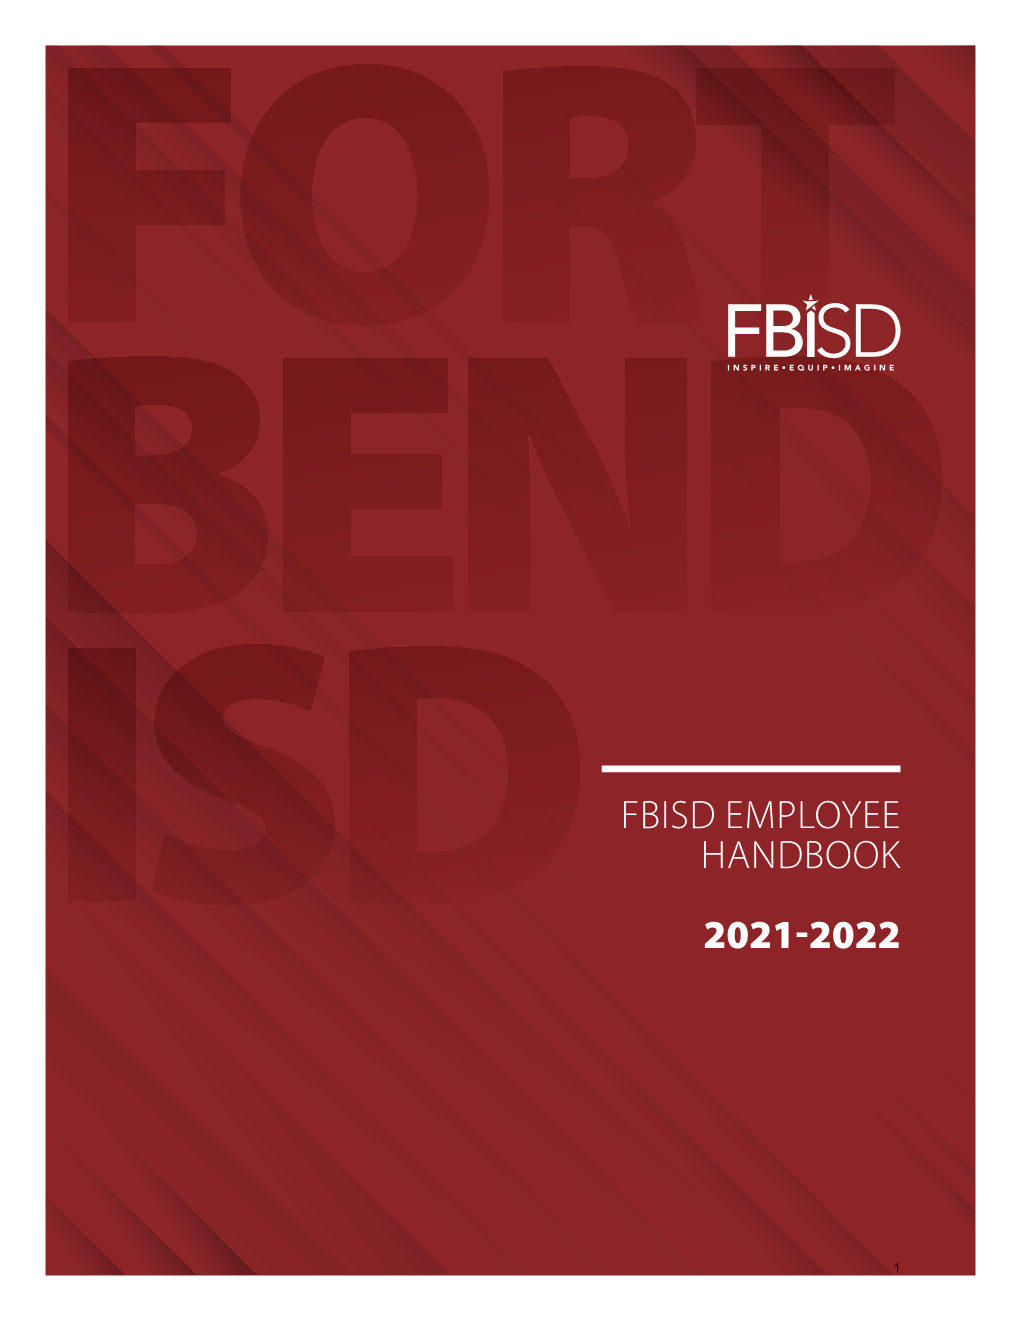 Fbisd Employee Handbook 2021-2022